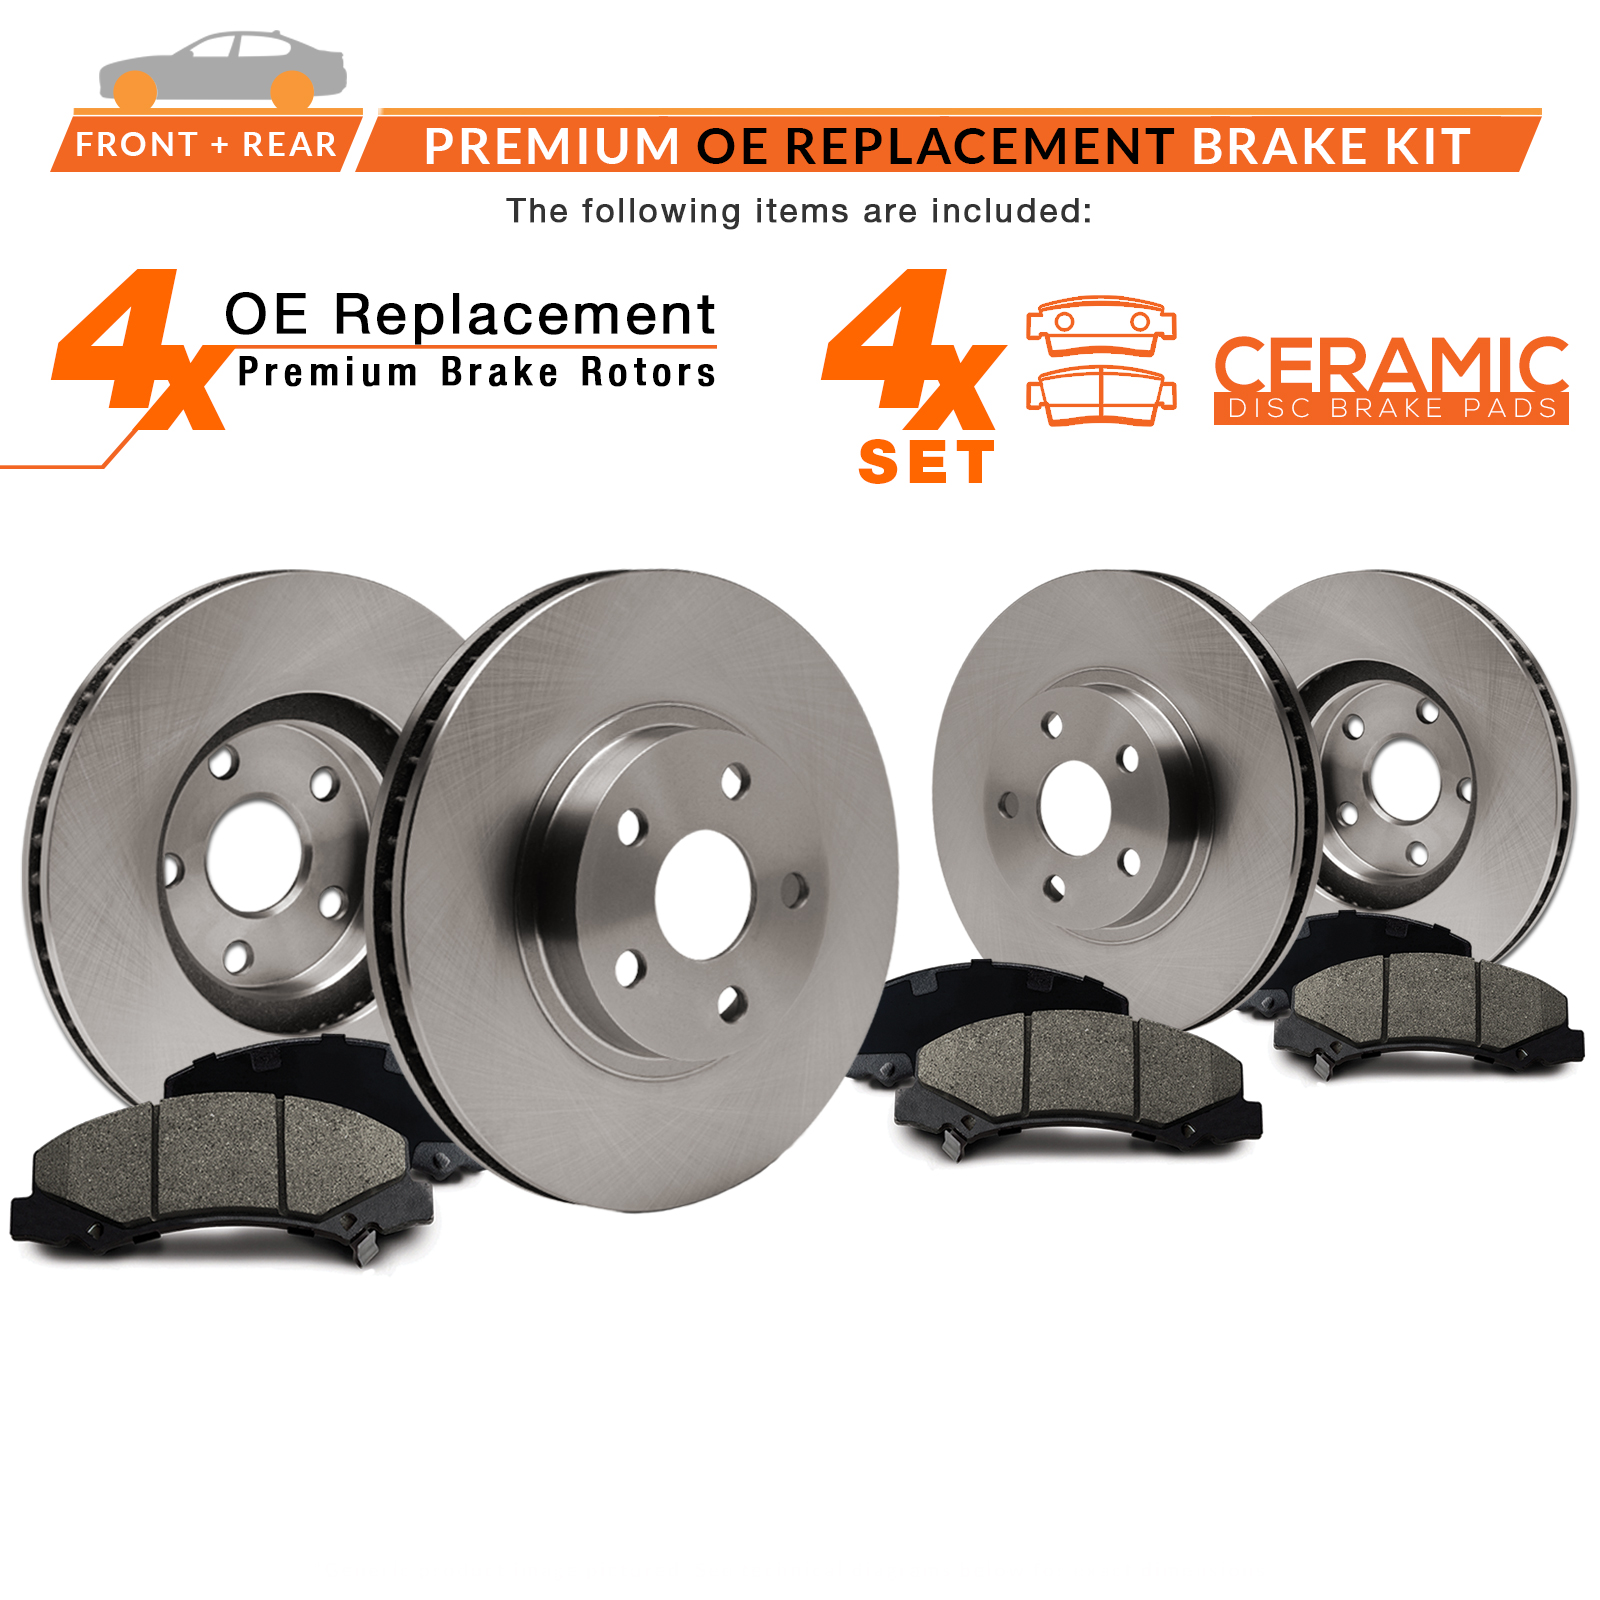 Clips 2 4 Ceramic Brake Pads Brake Disc Rotors + REAR 259 mm Premium OE 5 Lug 